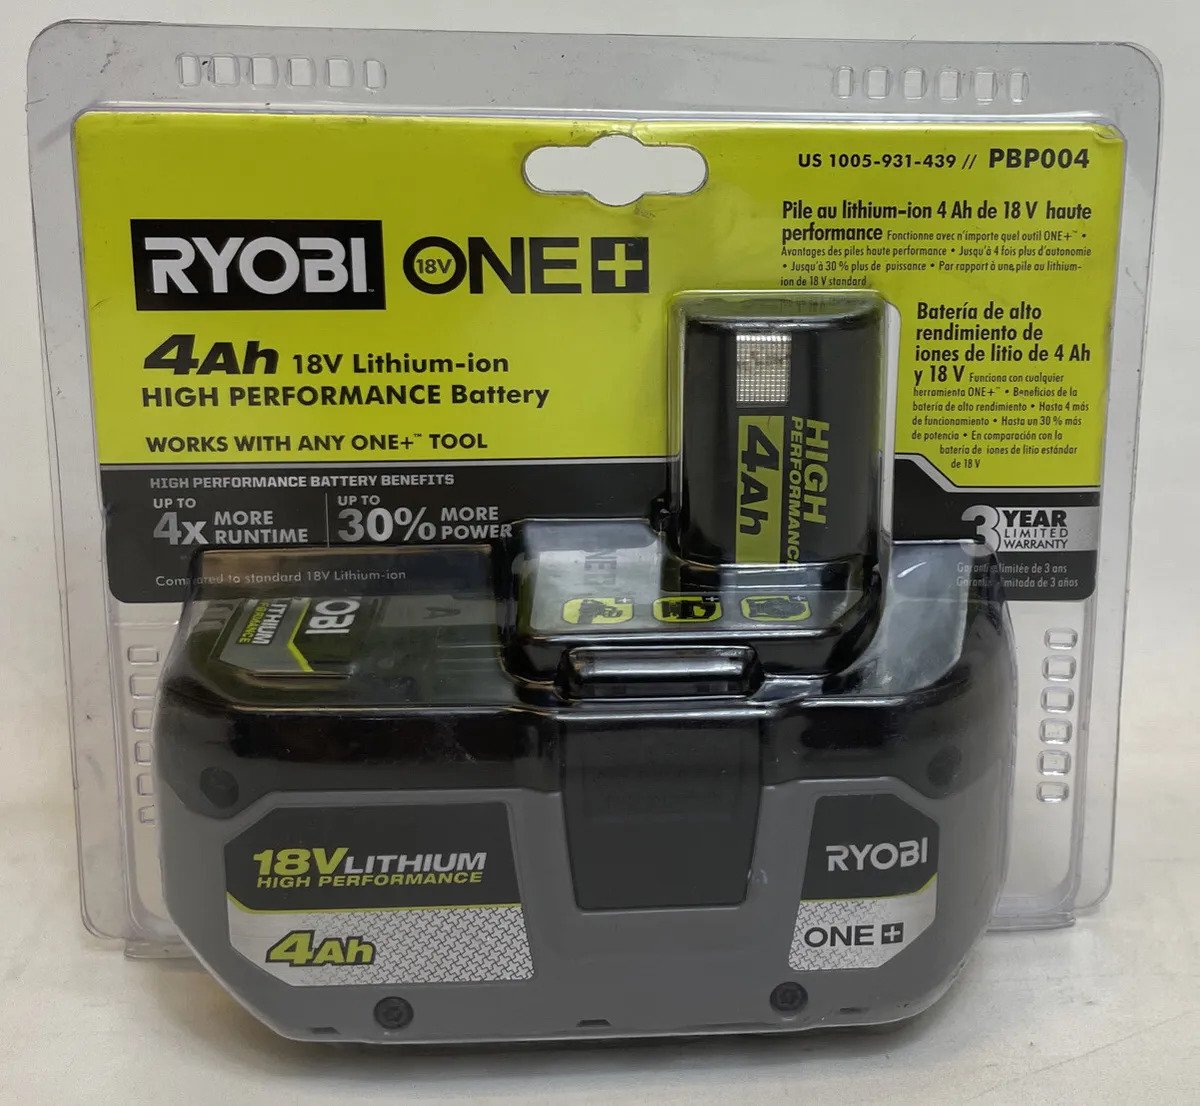 How Long Does A Ryobi 4Ah Battery Last